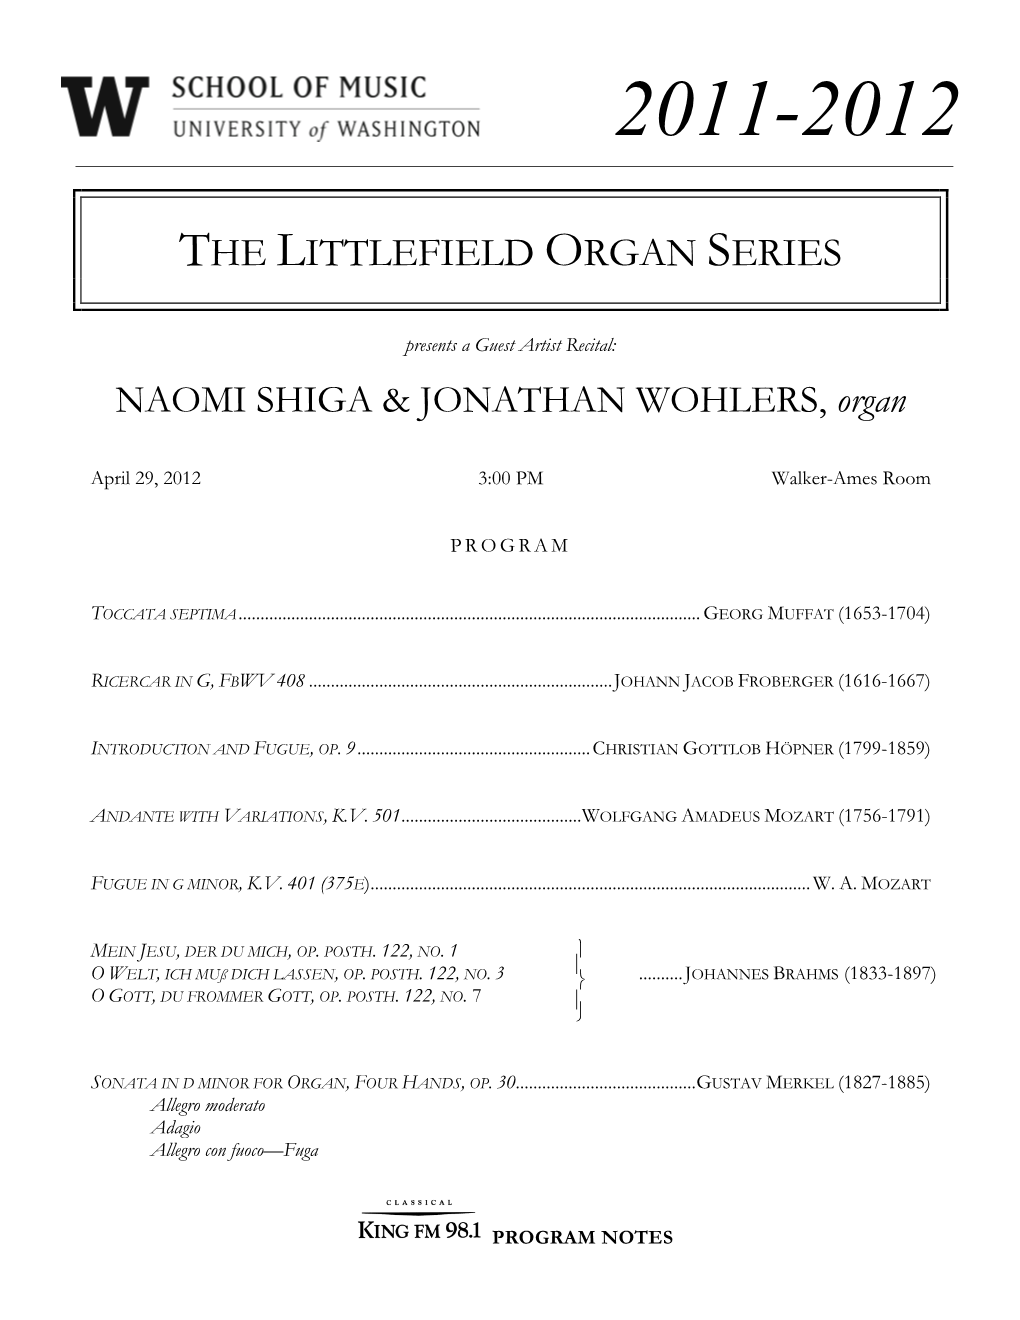 The Littlefield Organ Series